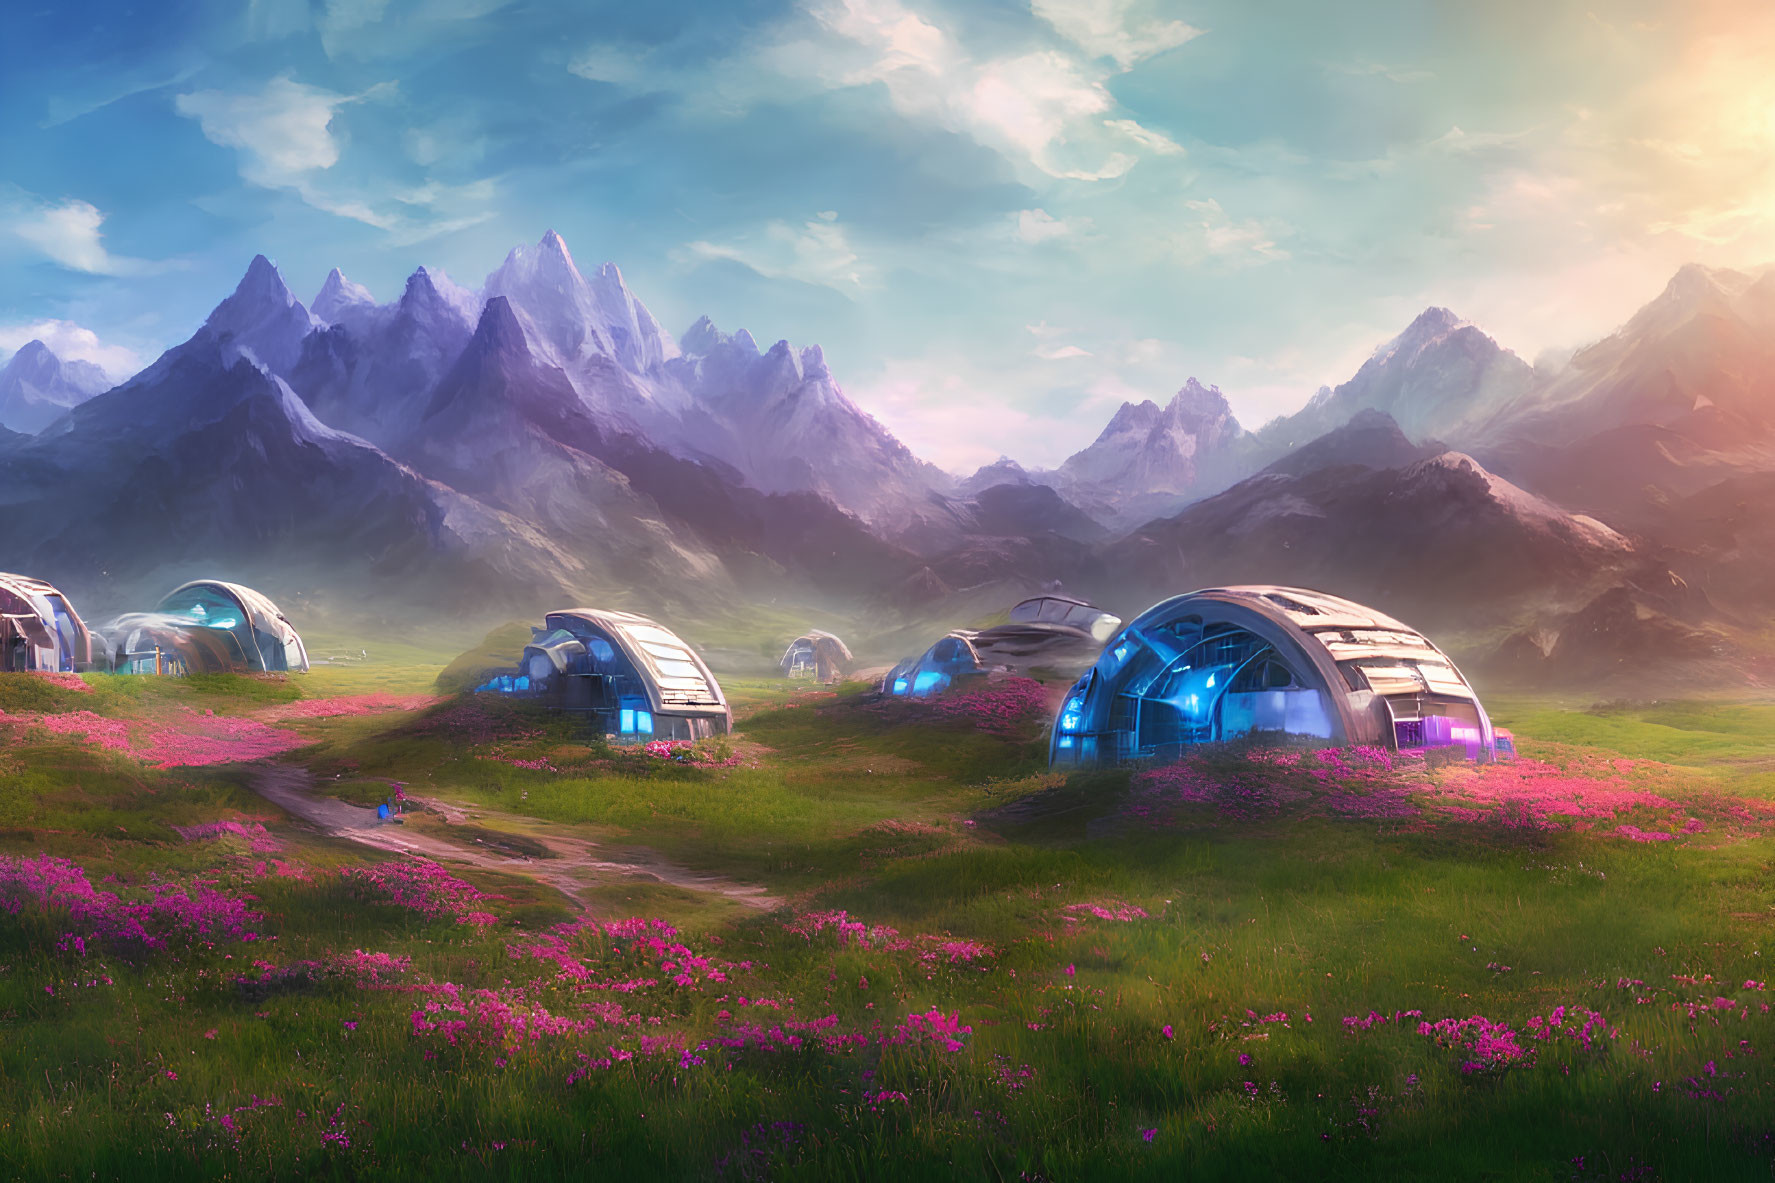 Futuristic colony with domed habitats in idyllic setting